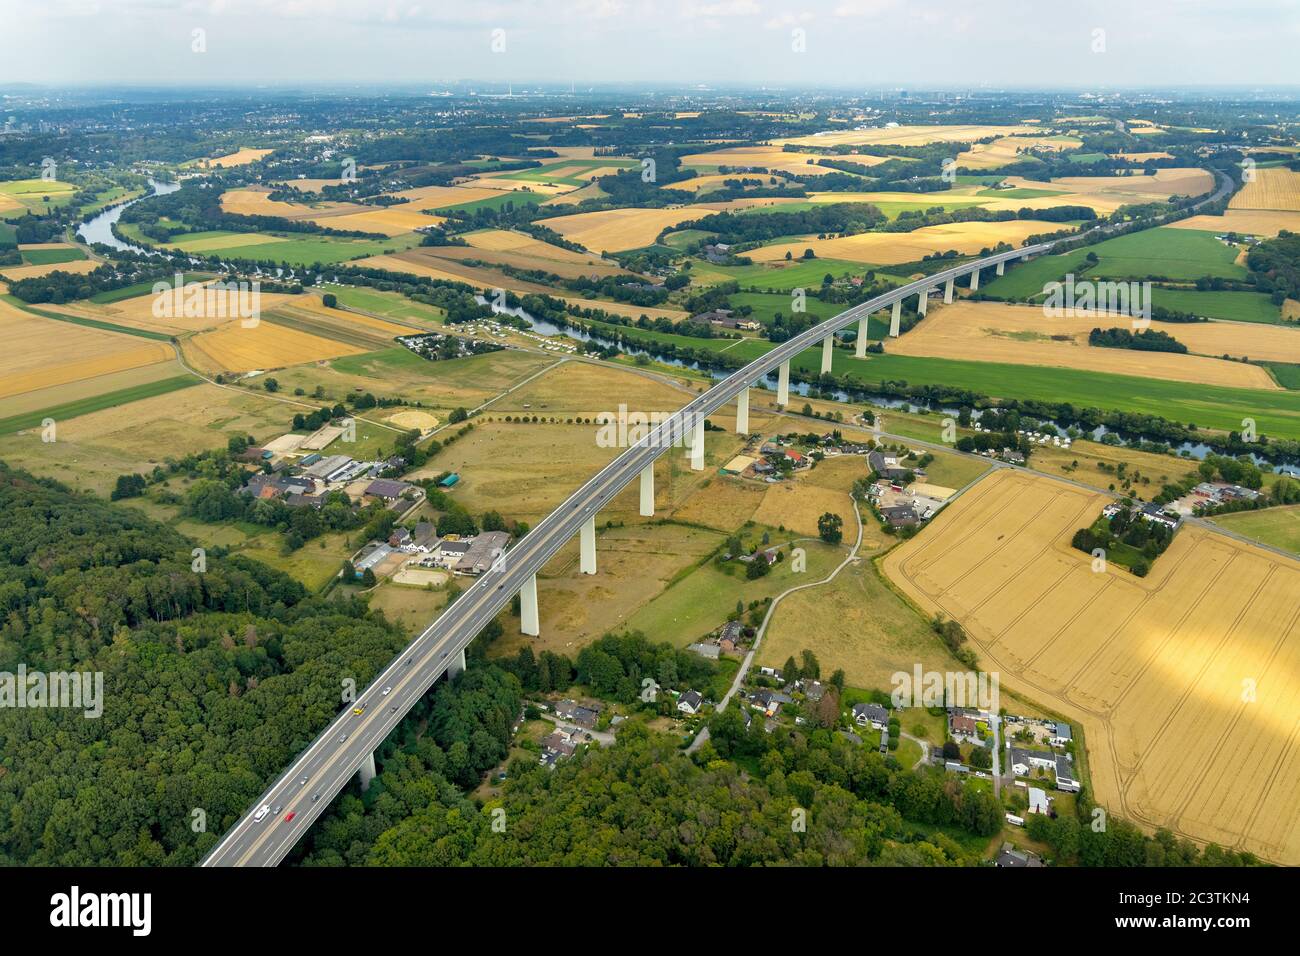 bridge Mintarder Bruecke of motorway $52 over river Ruhr, 21.07.2019, aerial view, Germany, North Rhine-Westphalia, Ruhr Area, Muelheim/Ruhr Stock Photo